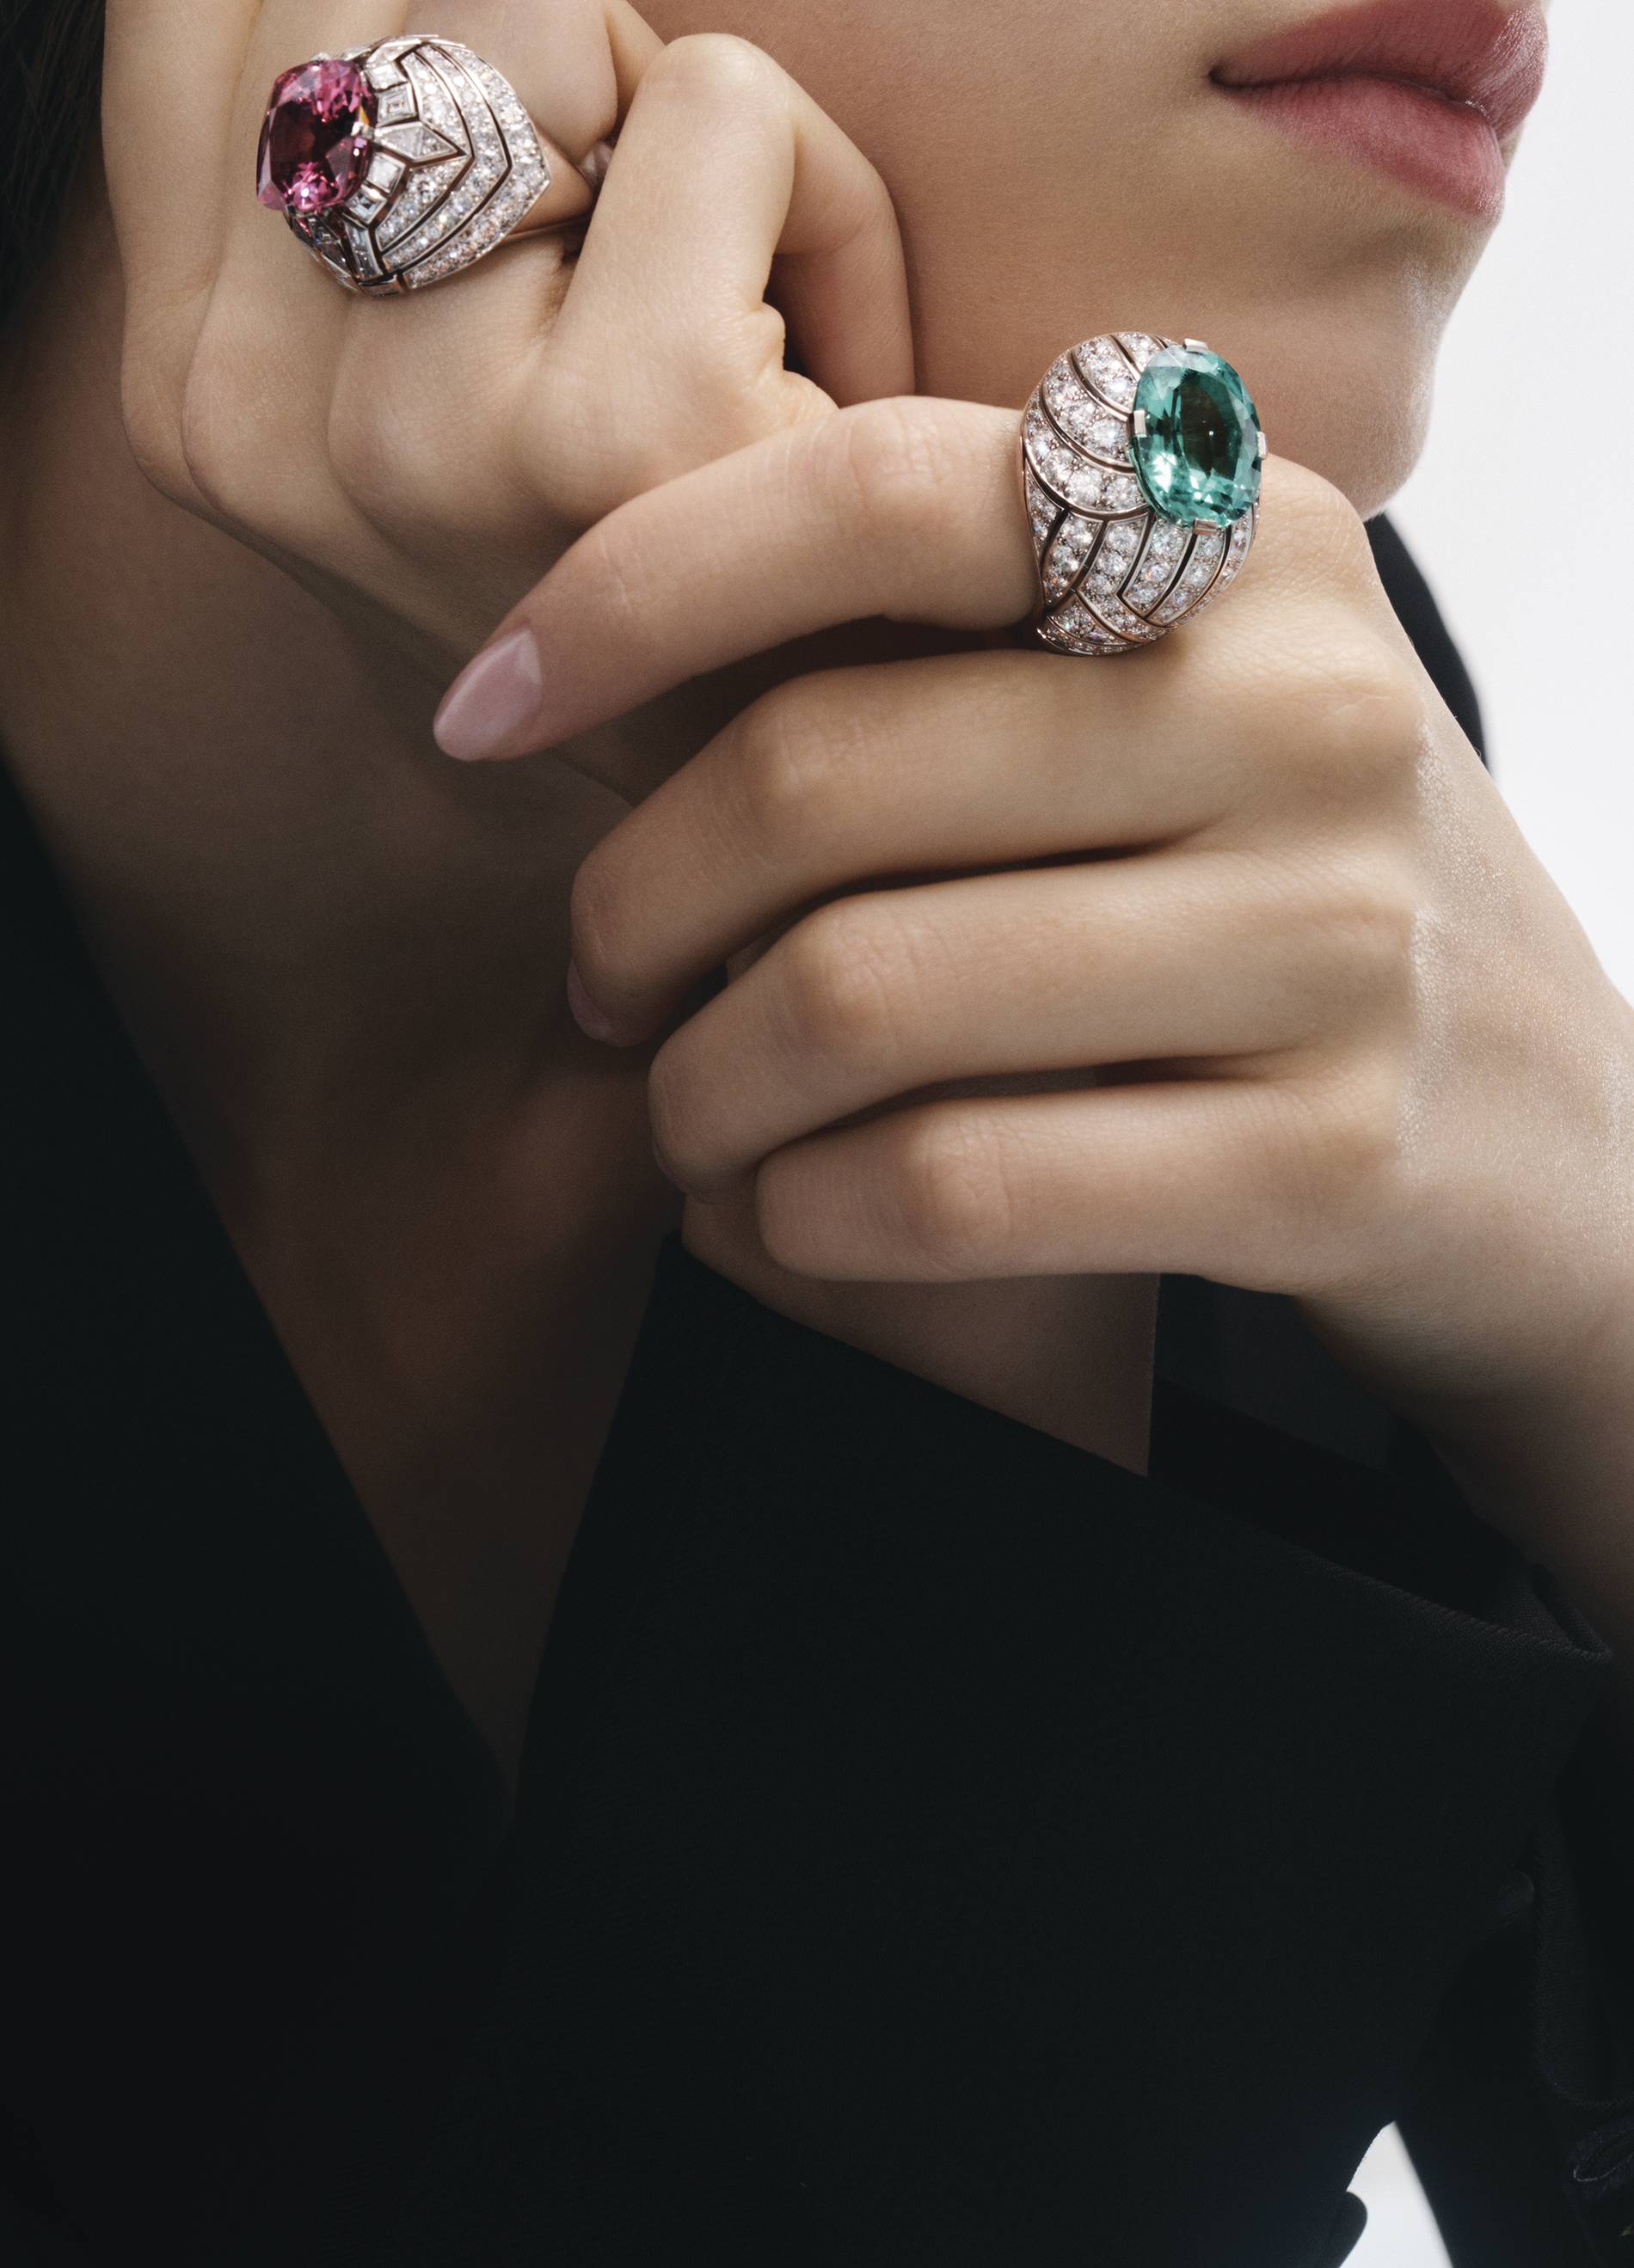 This Star-cut diamond ring from Louis Vuitton's high